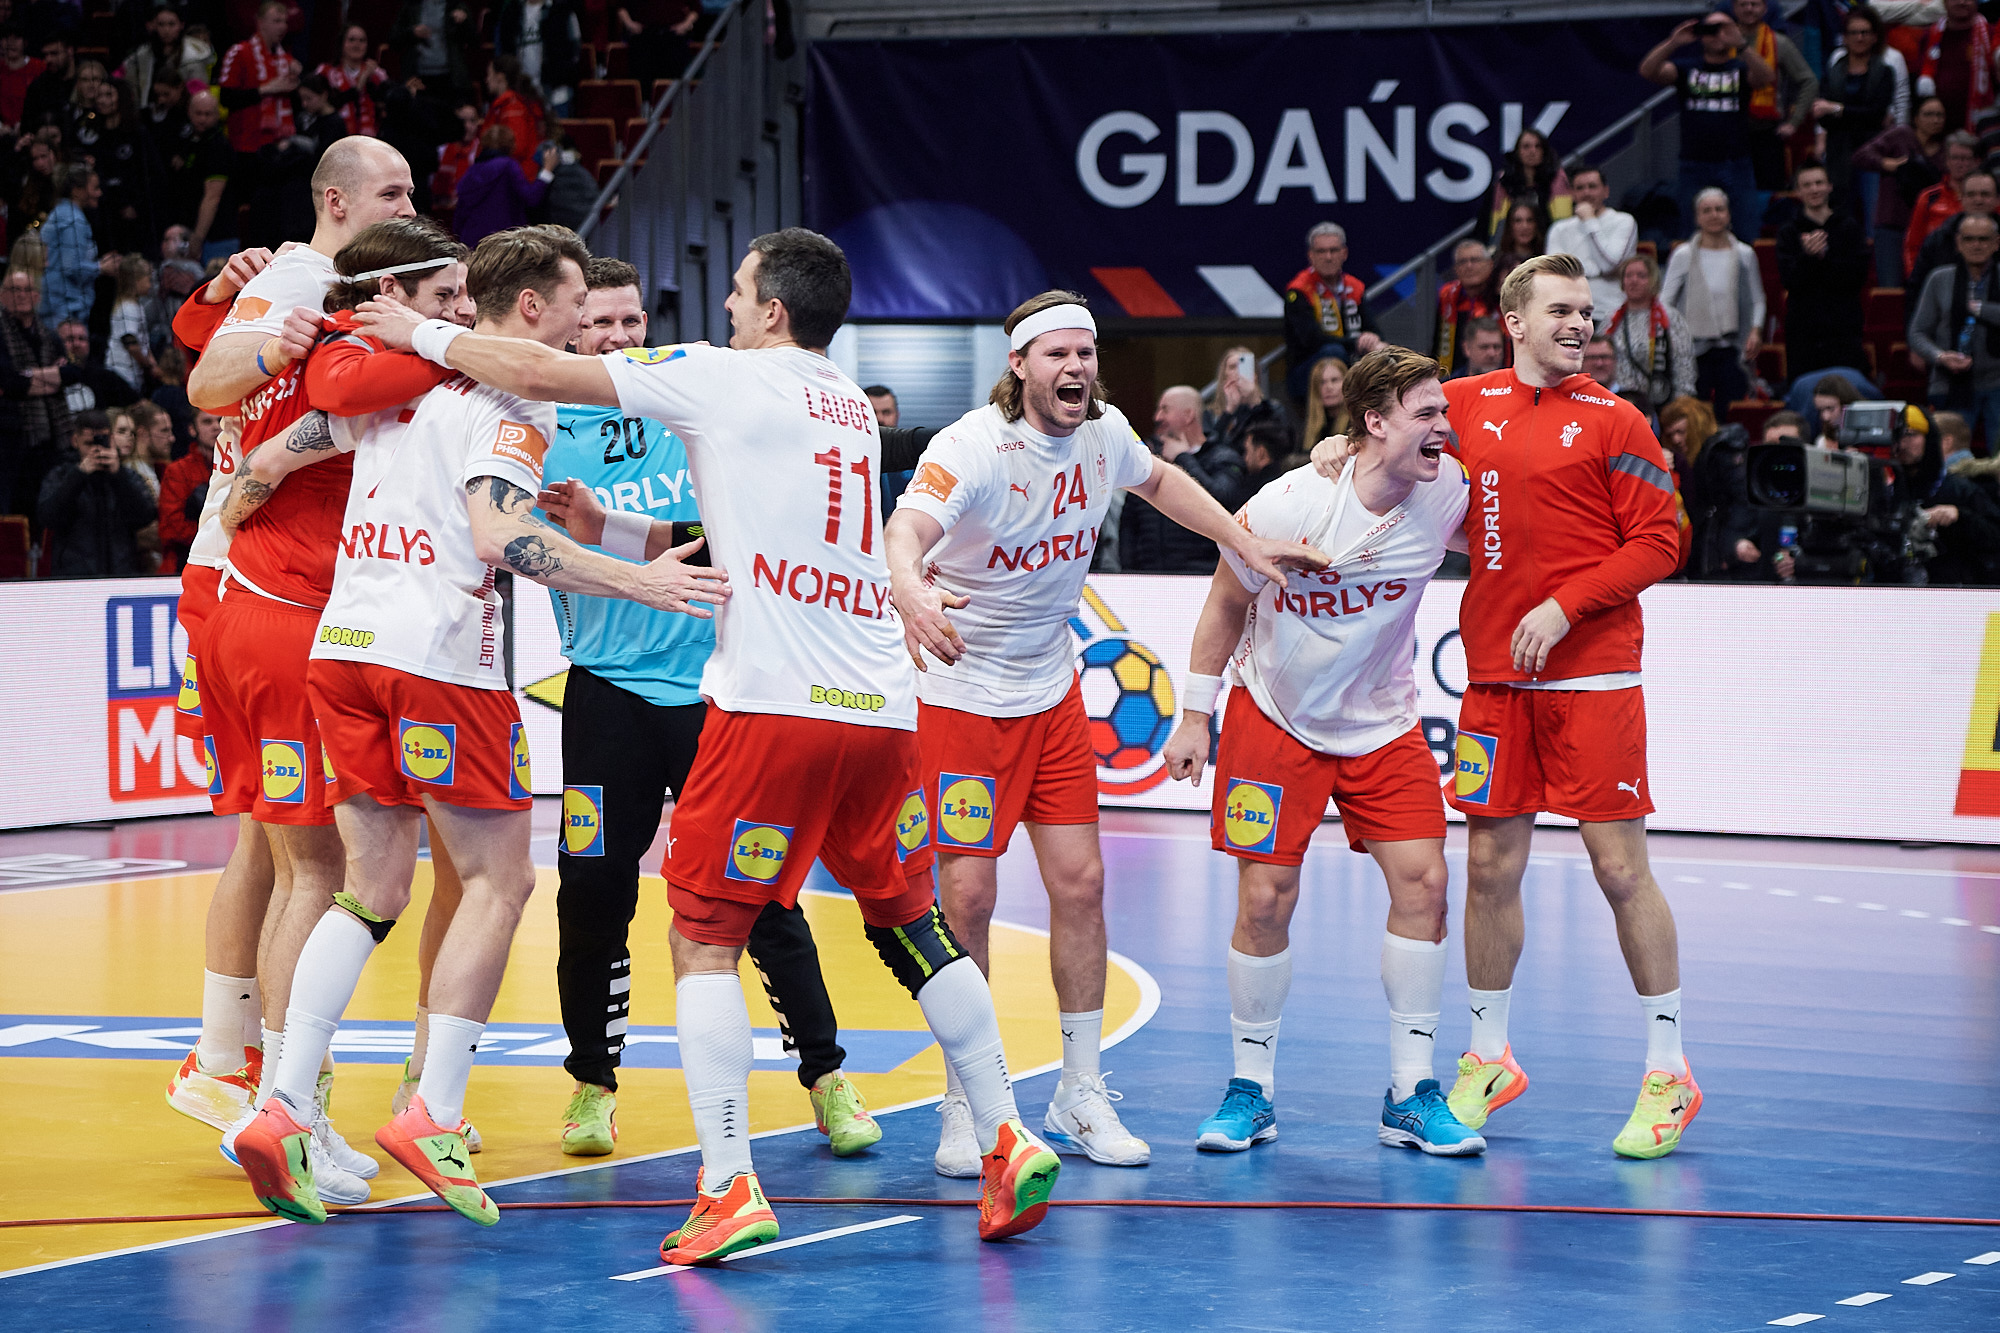 2019, 2021, 2023! Denmark again at the TOP of the World! Handball